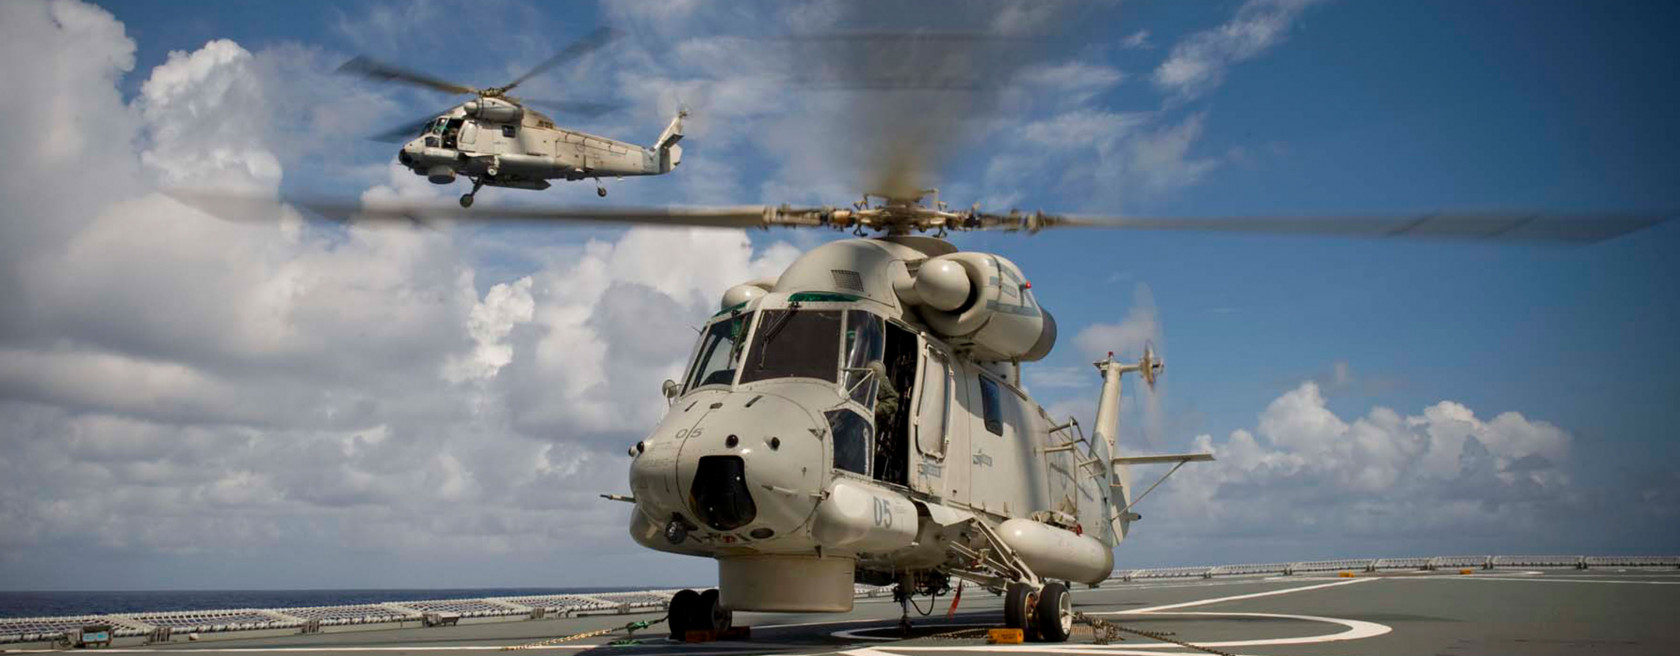 navy helicopter pilot full width 2